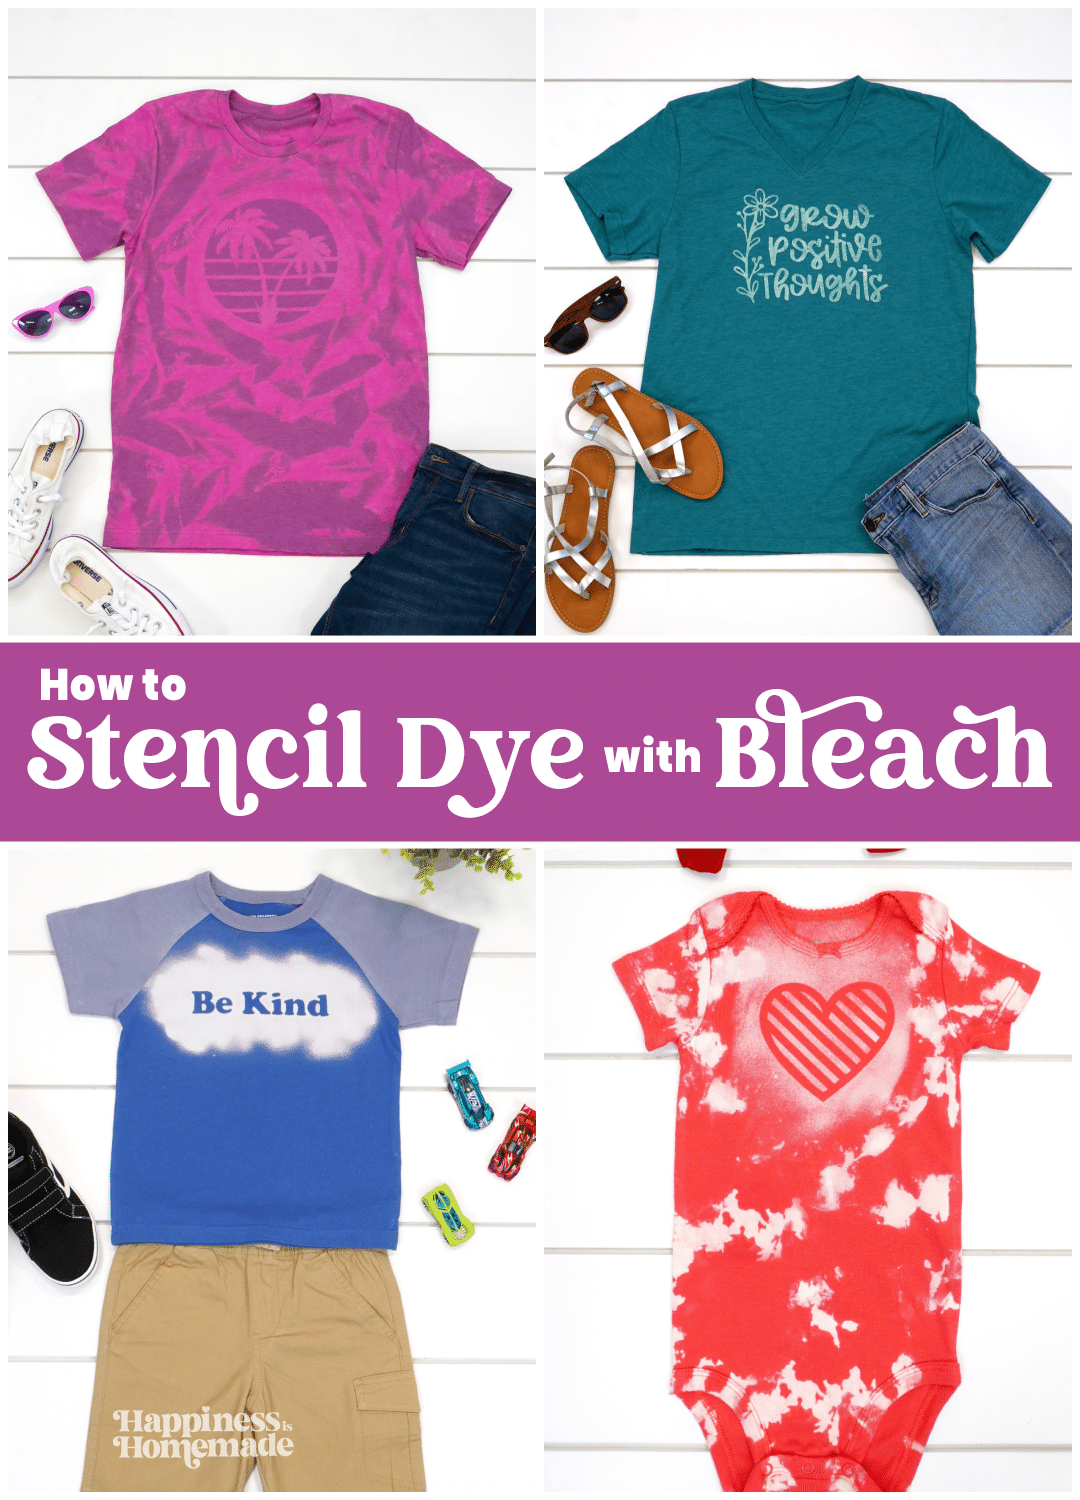 Bleach Spray Shirts: 7 DIY Tips for Beginners - Silhouette School